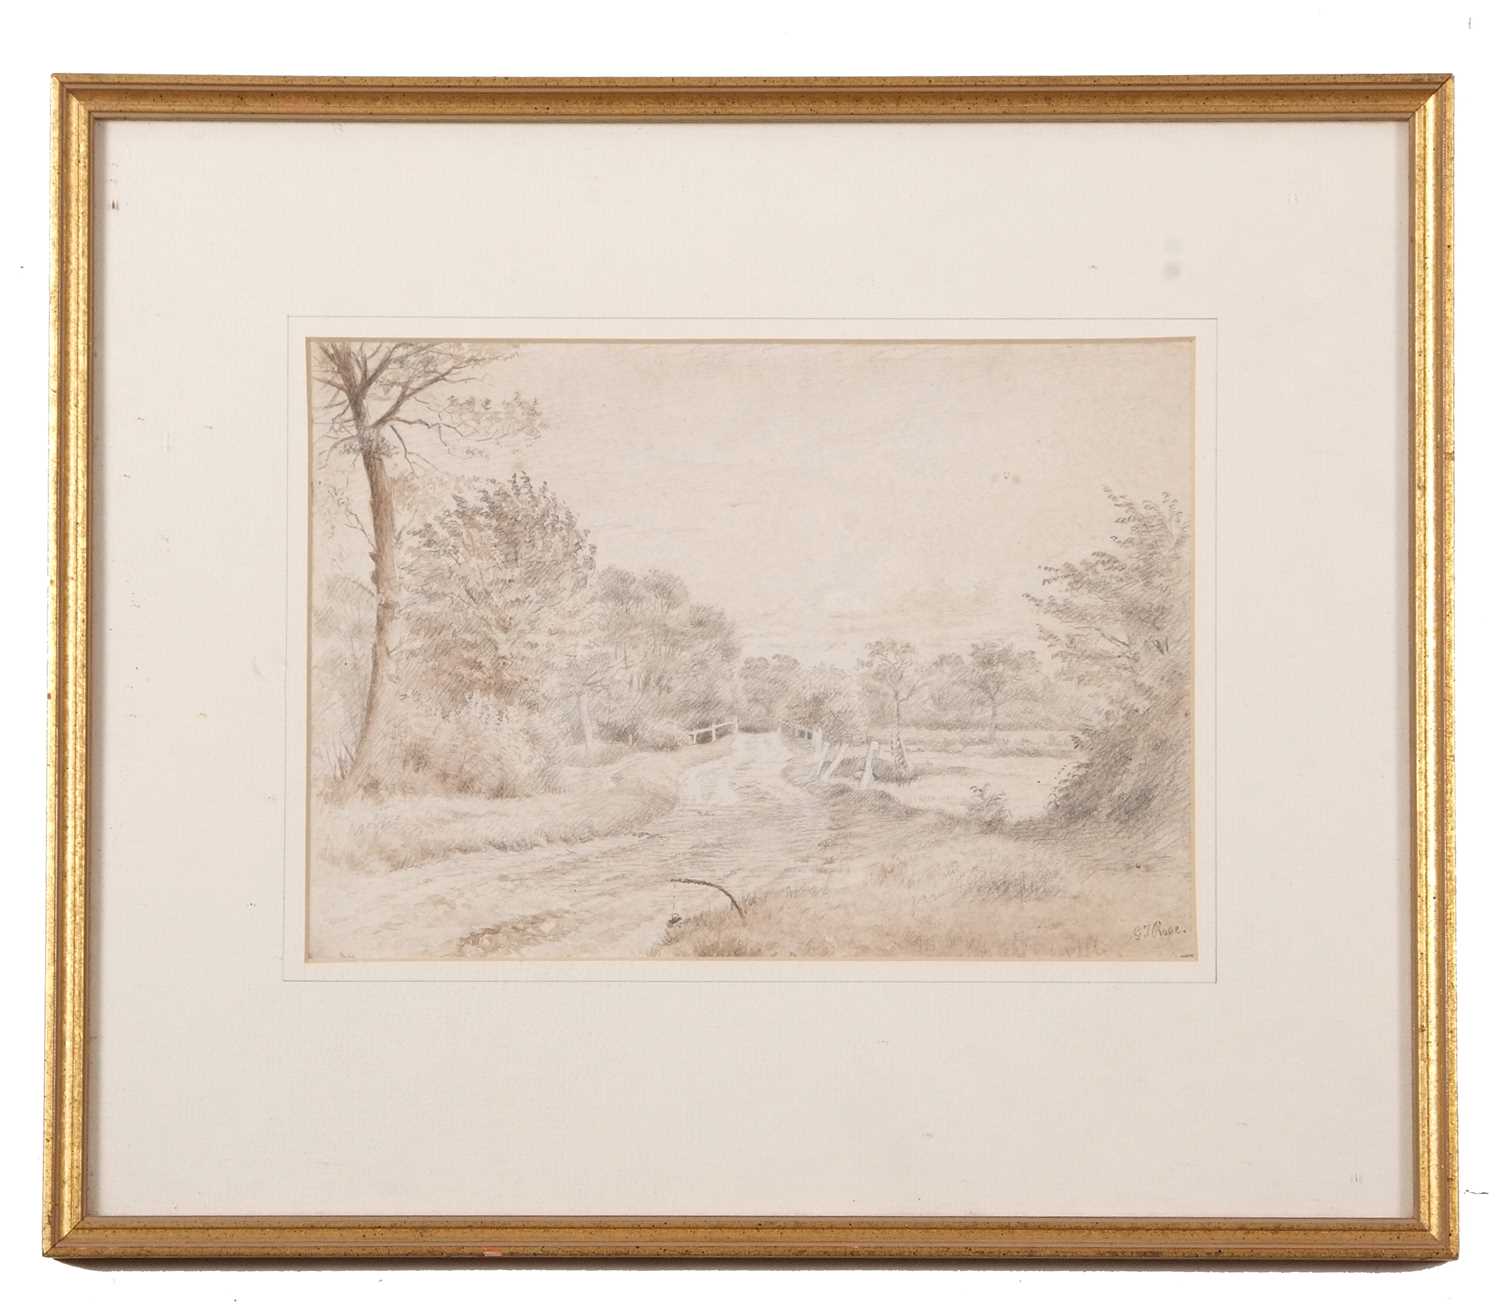 George Thomas Rope (British,1846-1929), a view across Langham Bridge, pencil and sepia